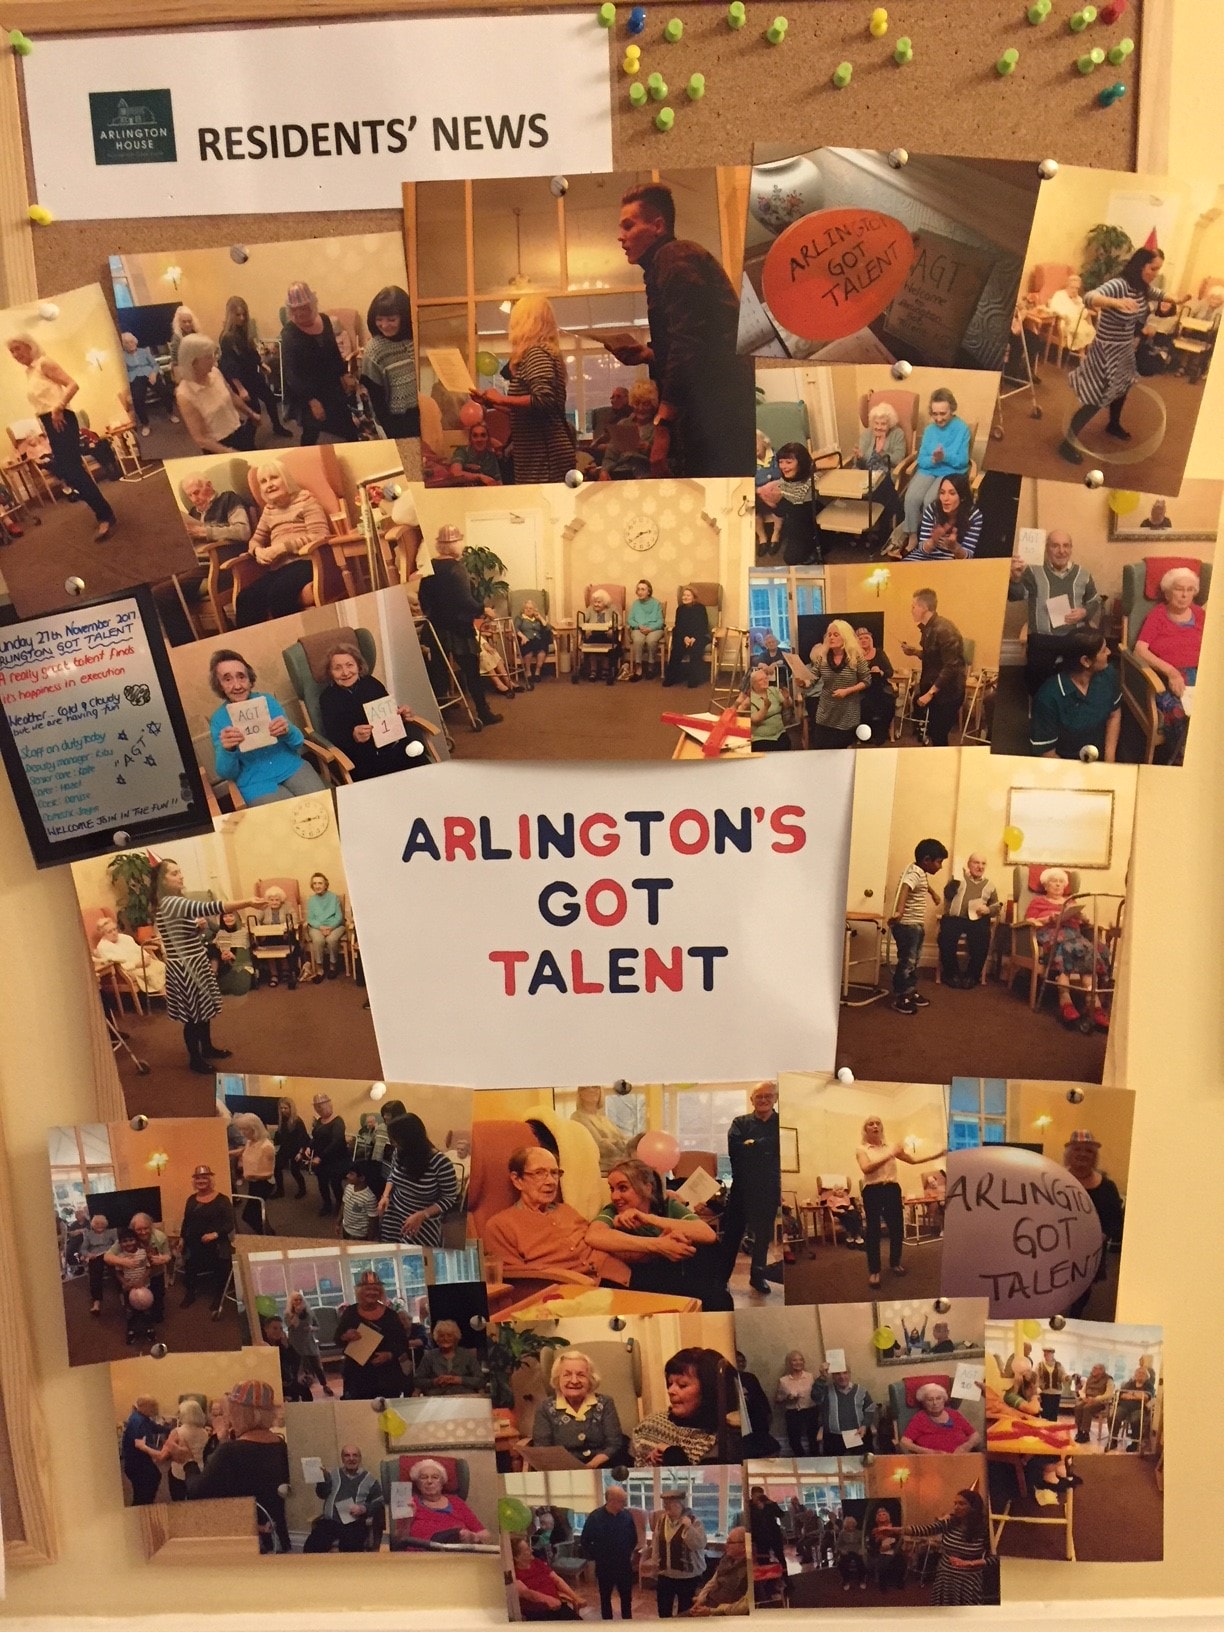 Arlington’s Got Talent (AGT)